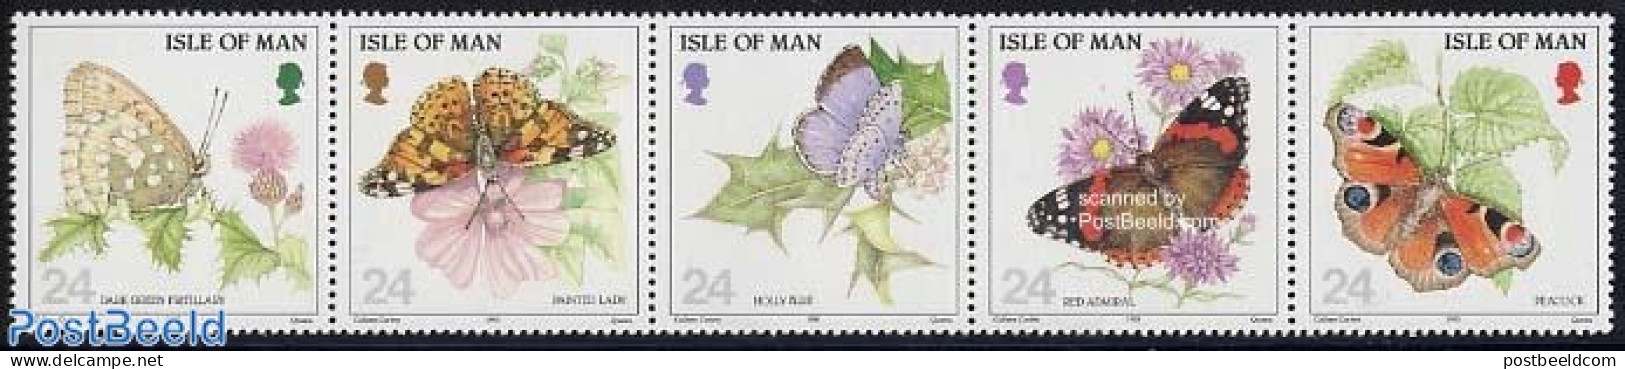 Isle Of Man 1993 Butterflies 5v [::::], Mint NH, Nature - Butterflies - Isle Of Man